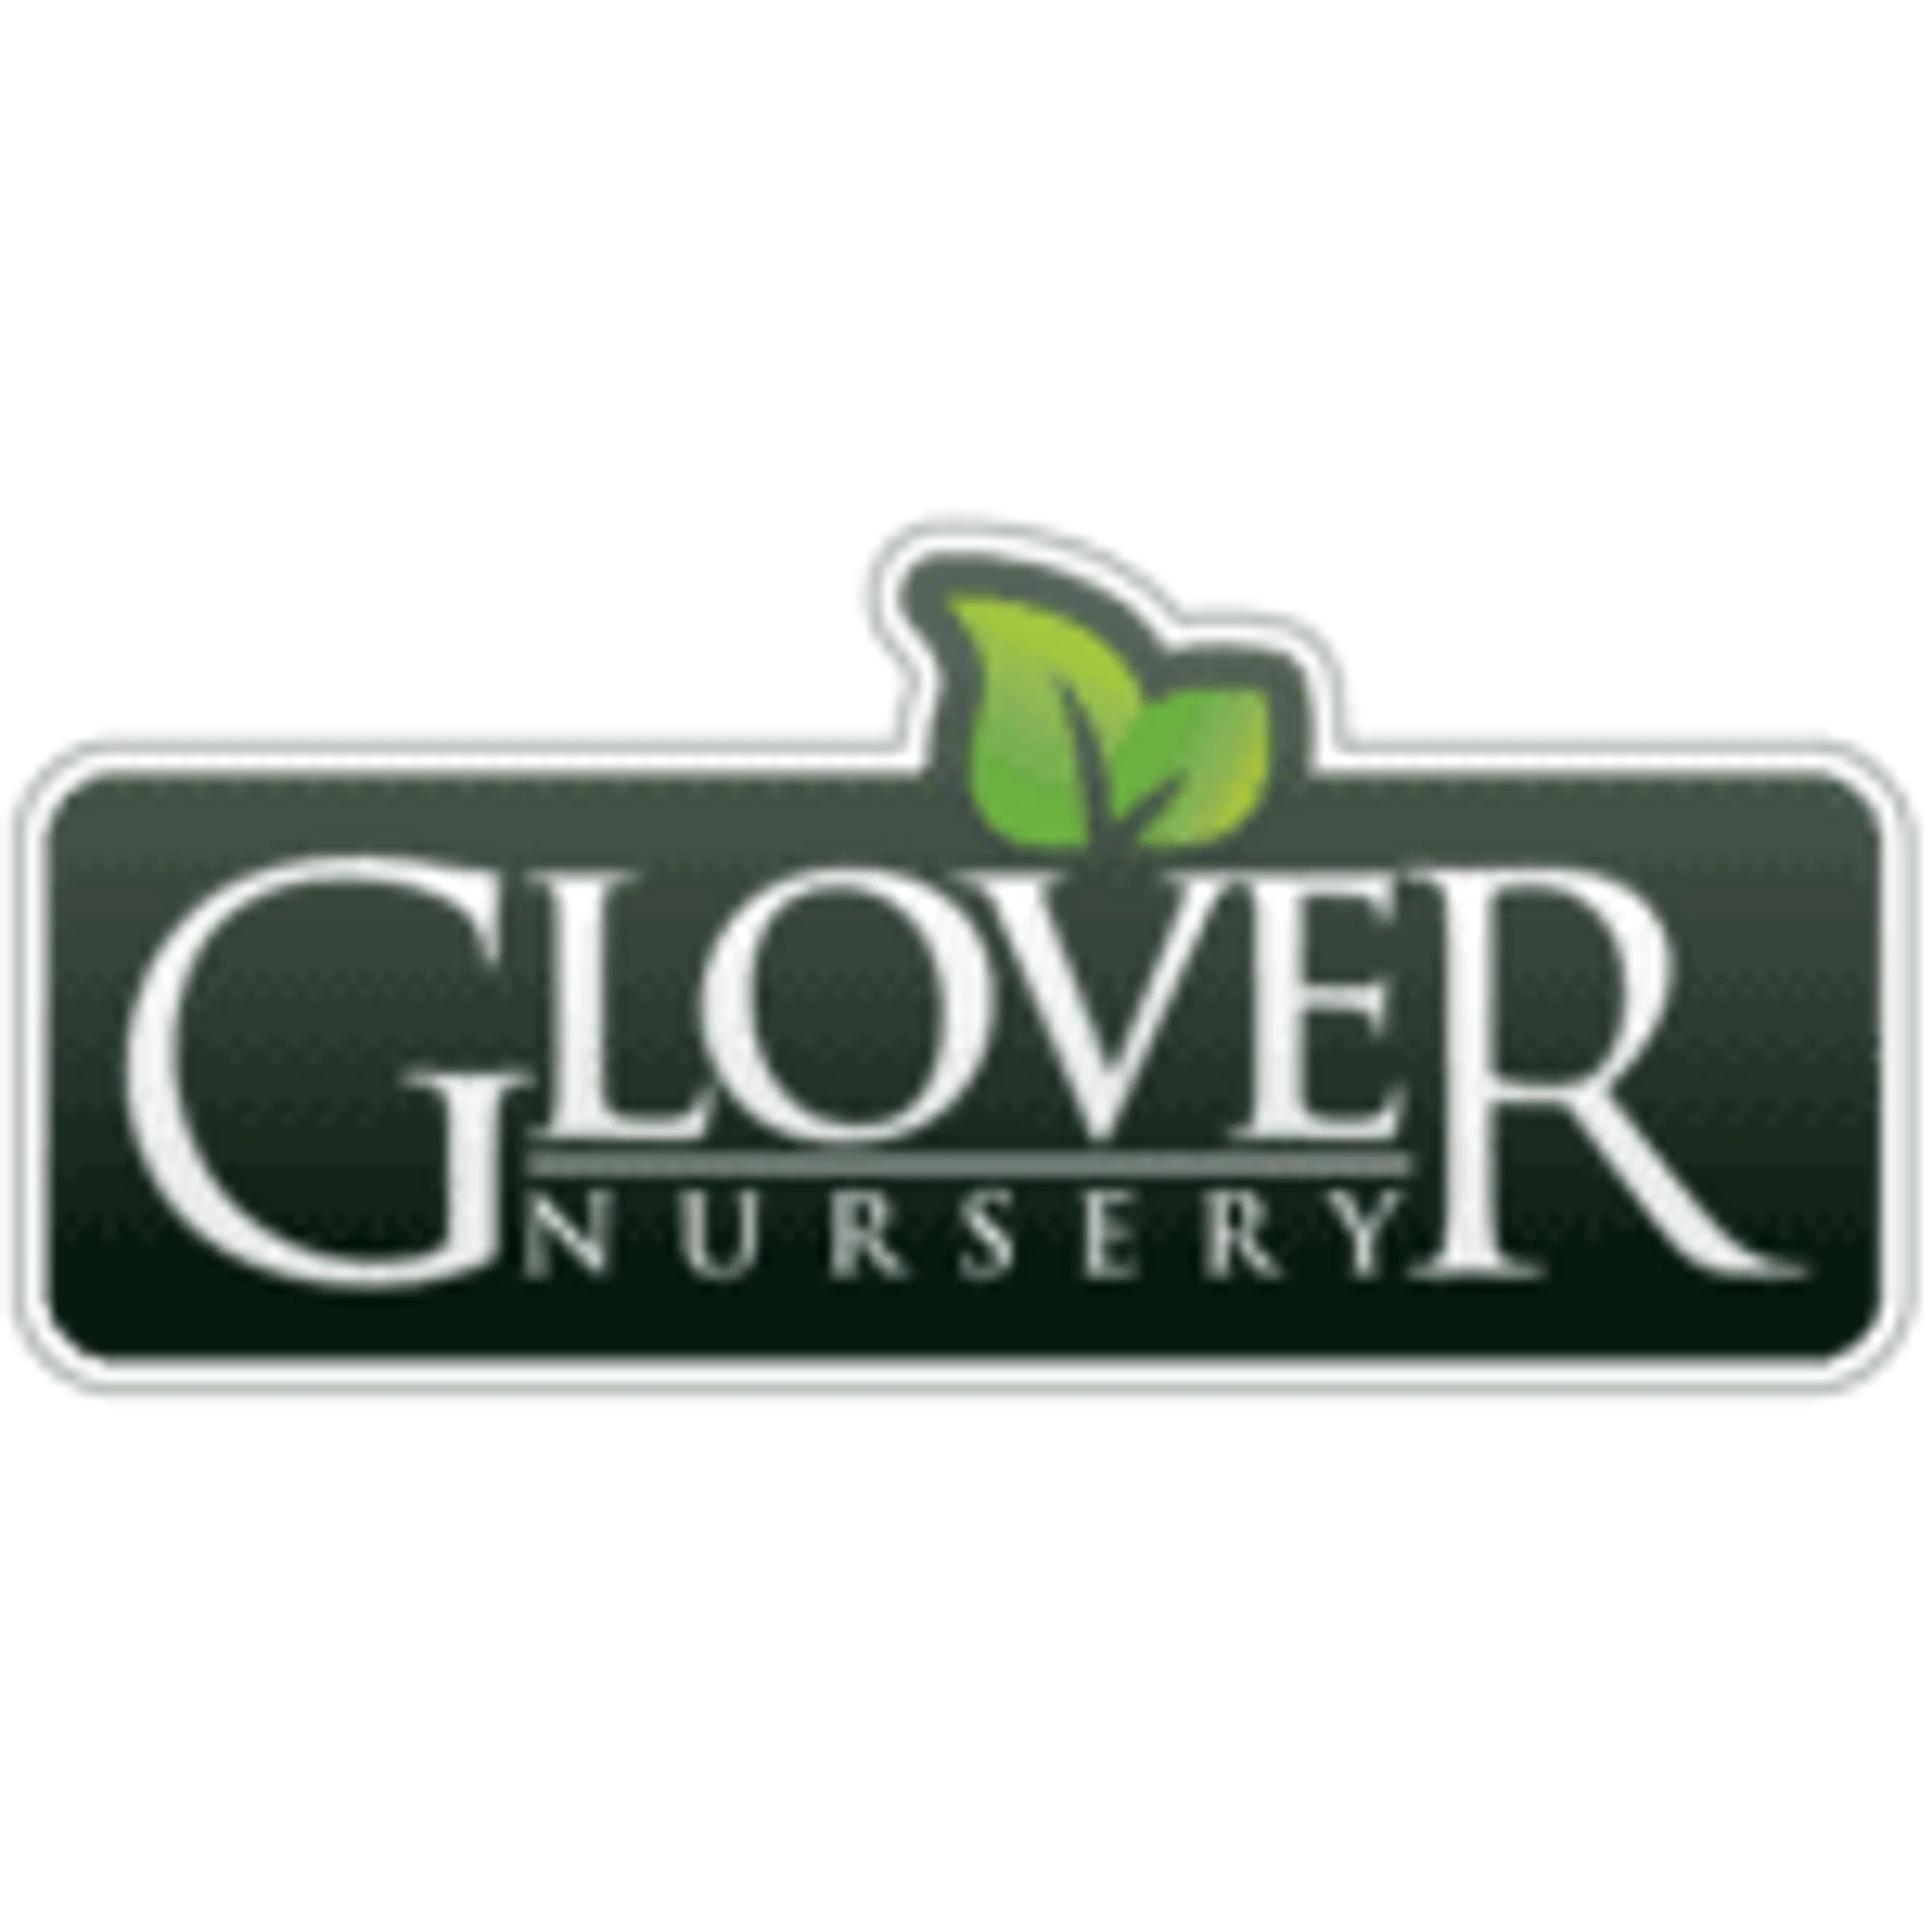 glovernursery.com logo